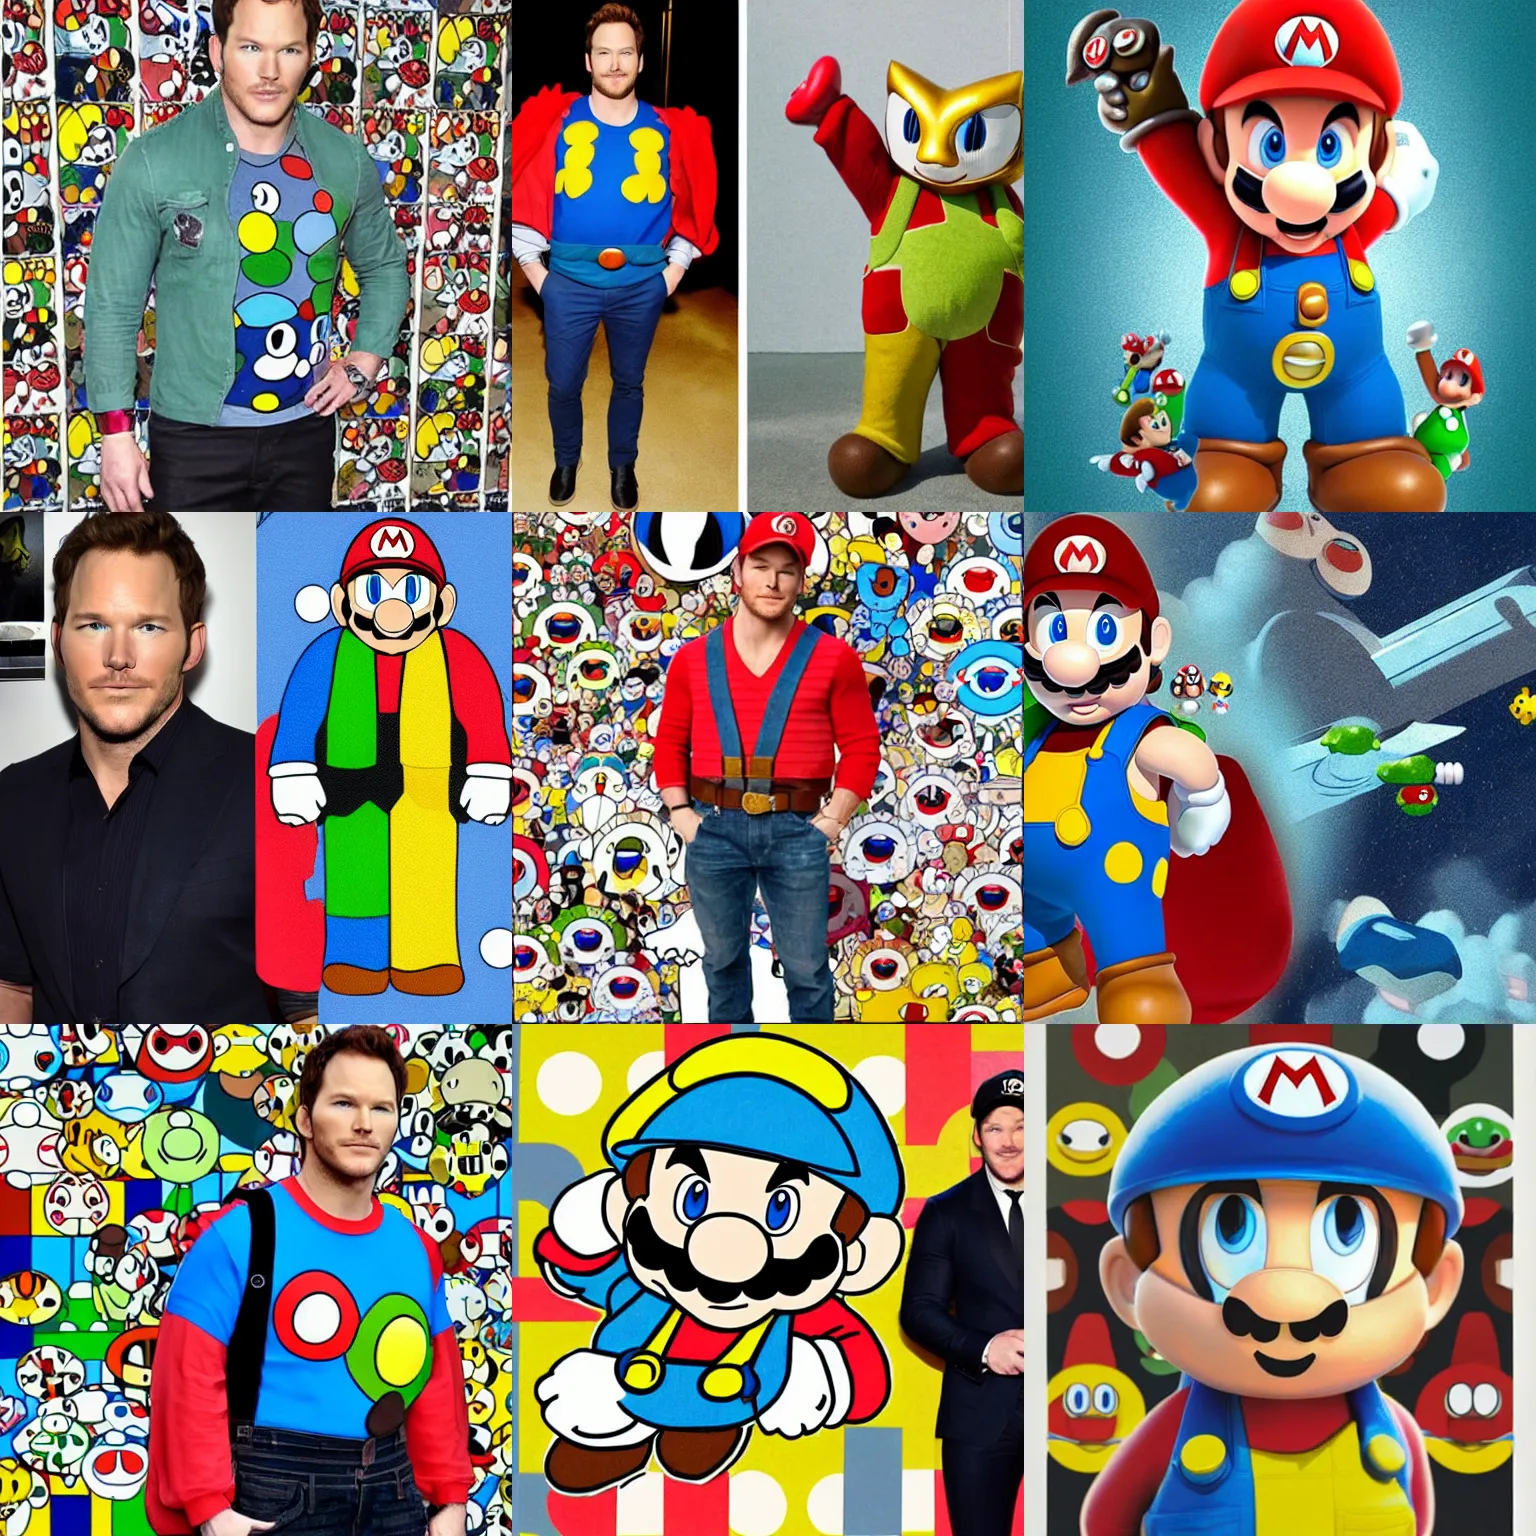 Prompt: Chris Pratt wearing Super Mario outfit, artwork, modernism, takashi murakami